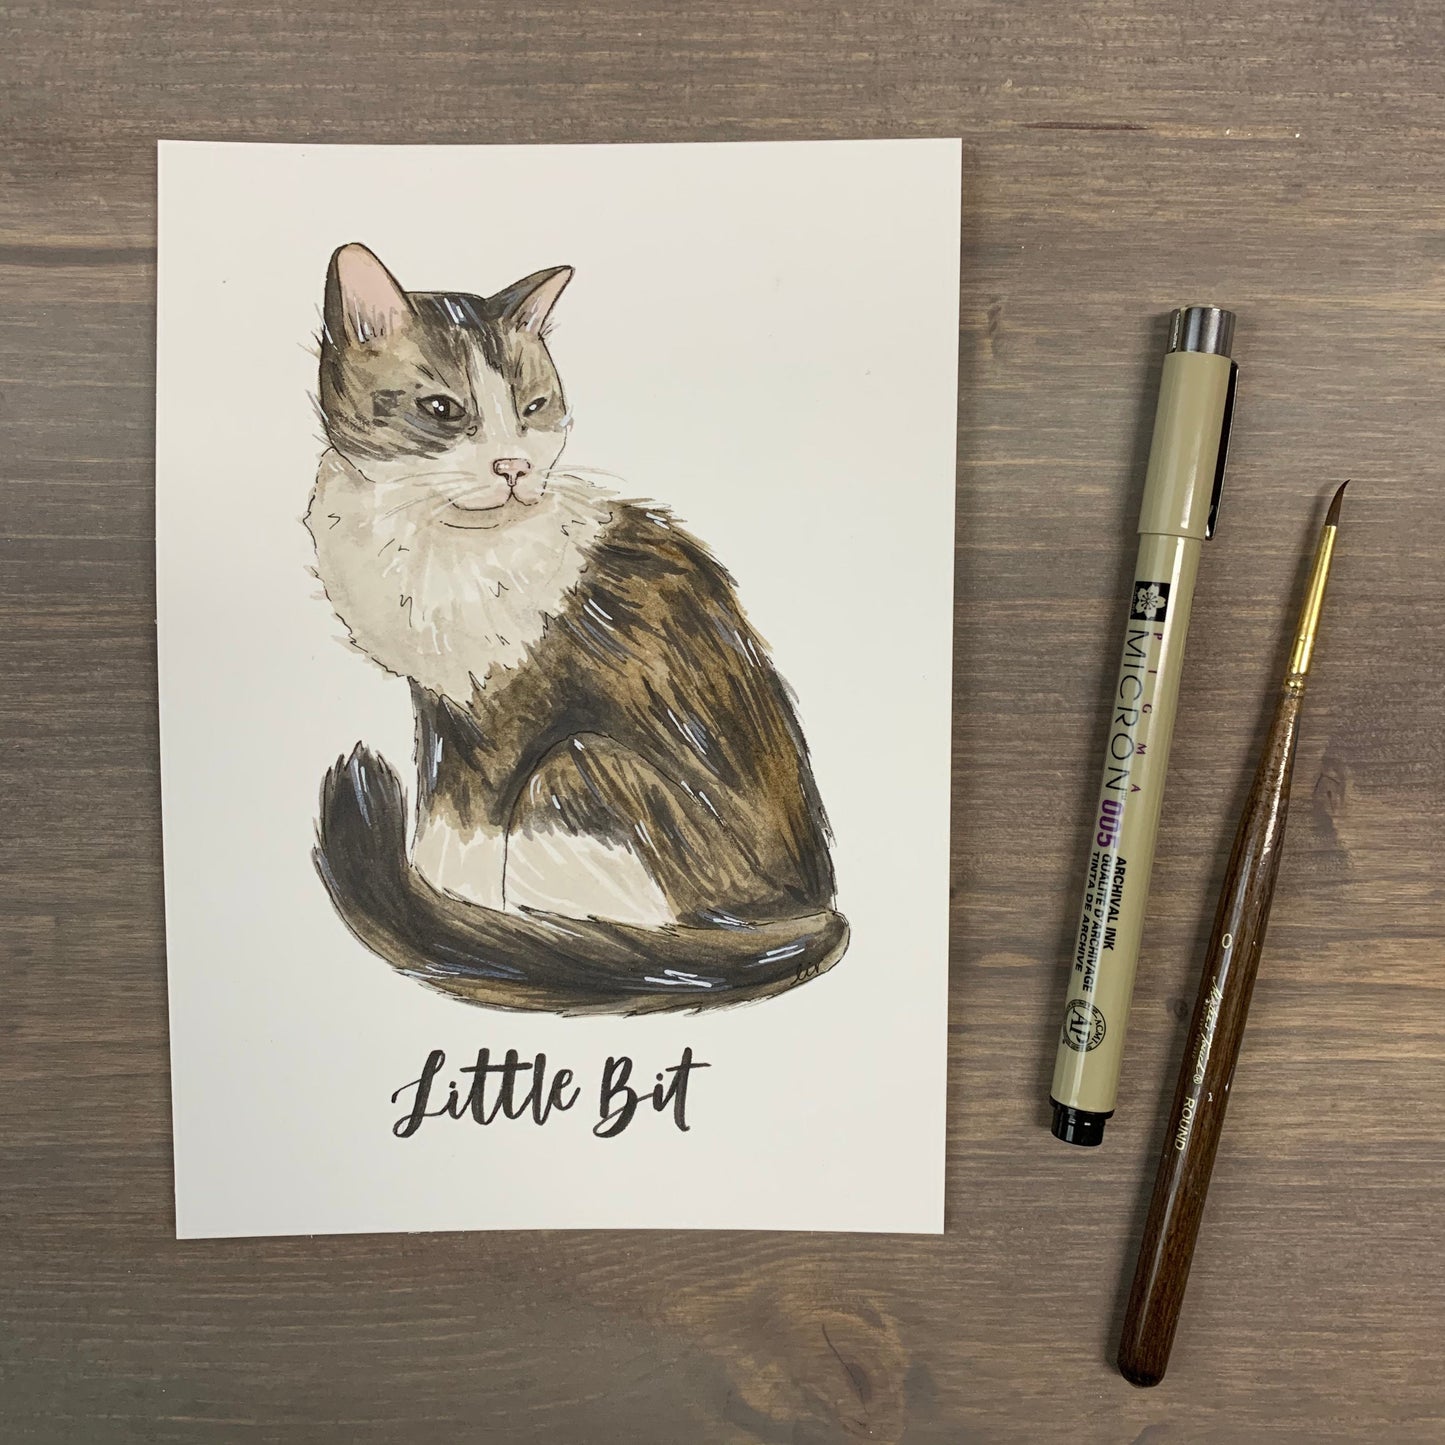 Watercolor Pet Portraits